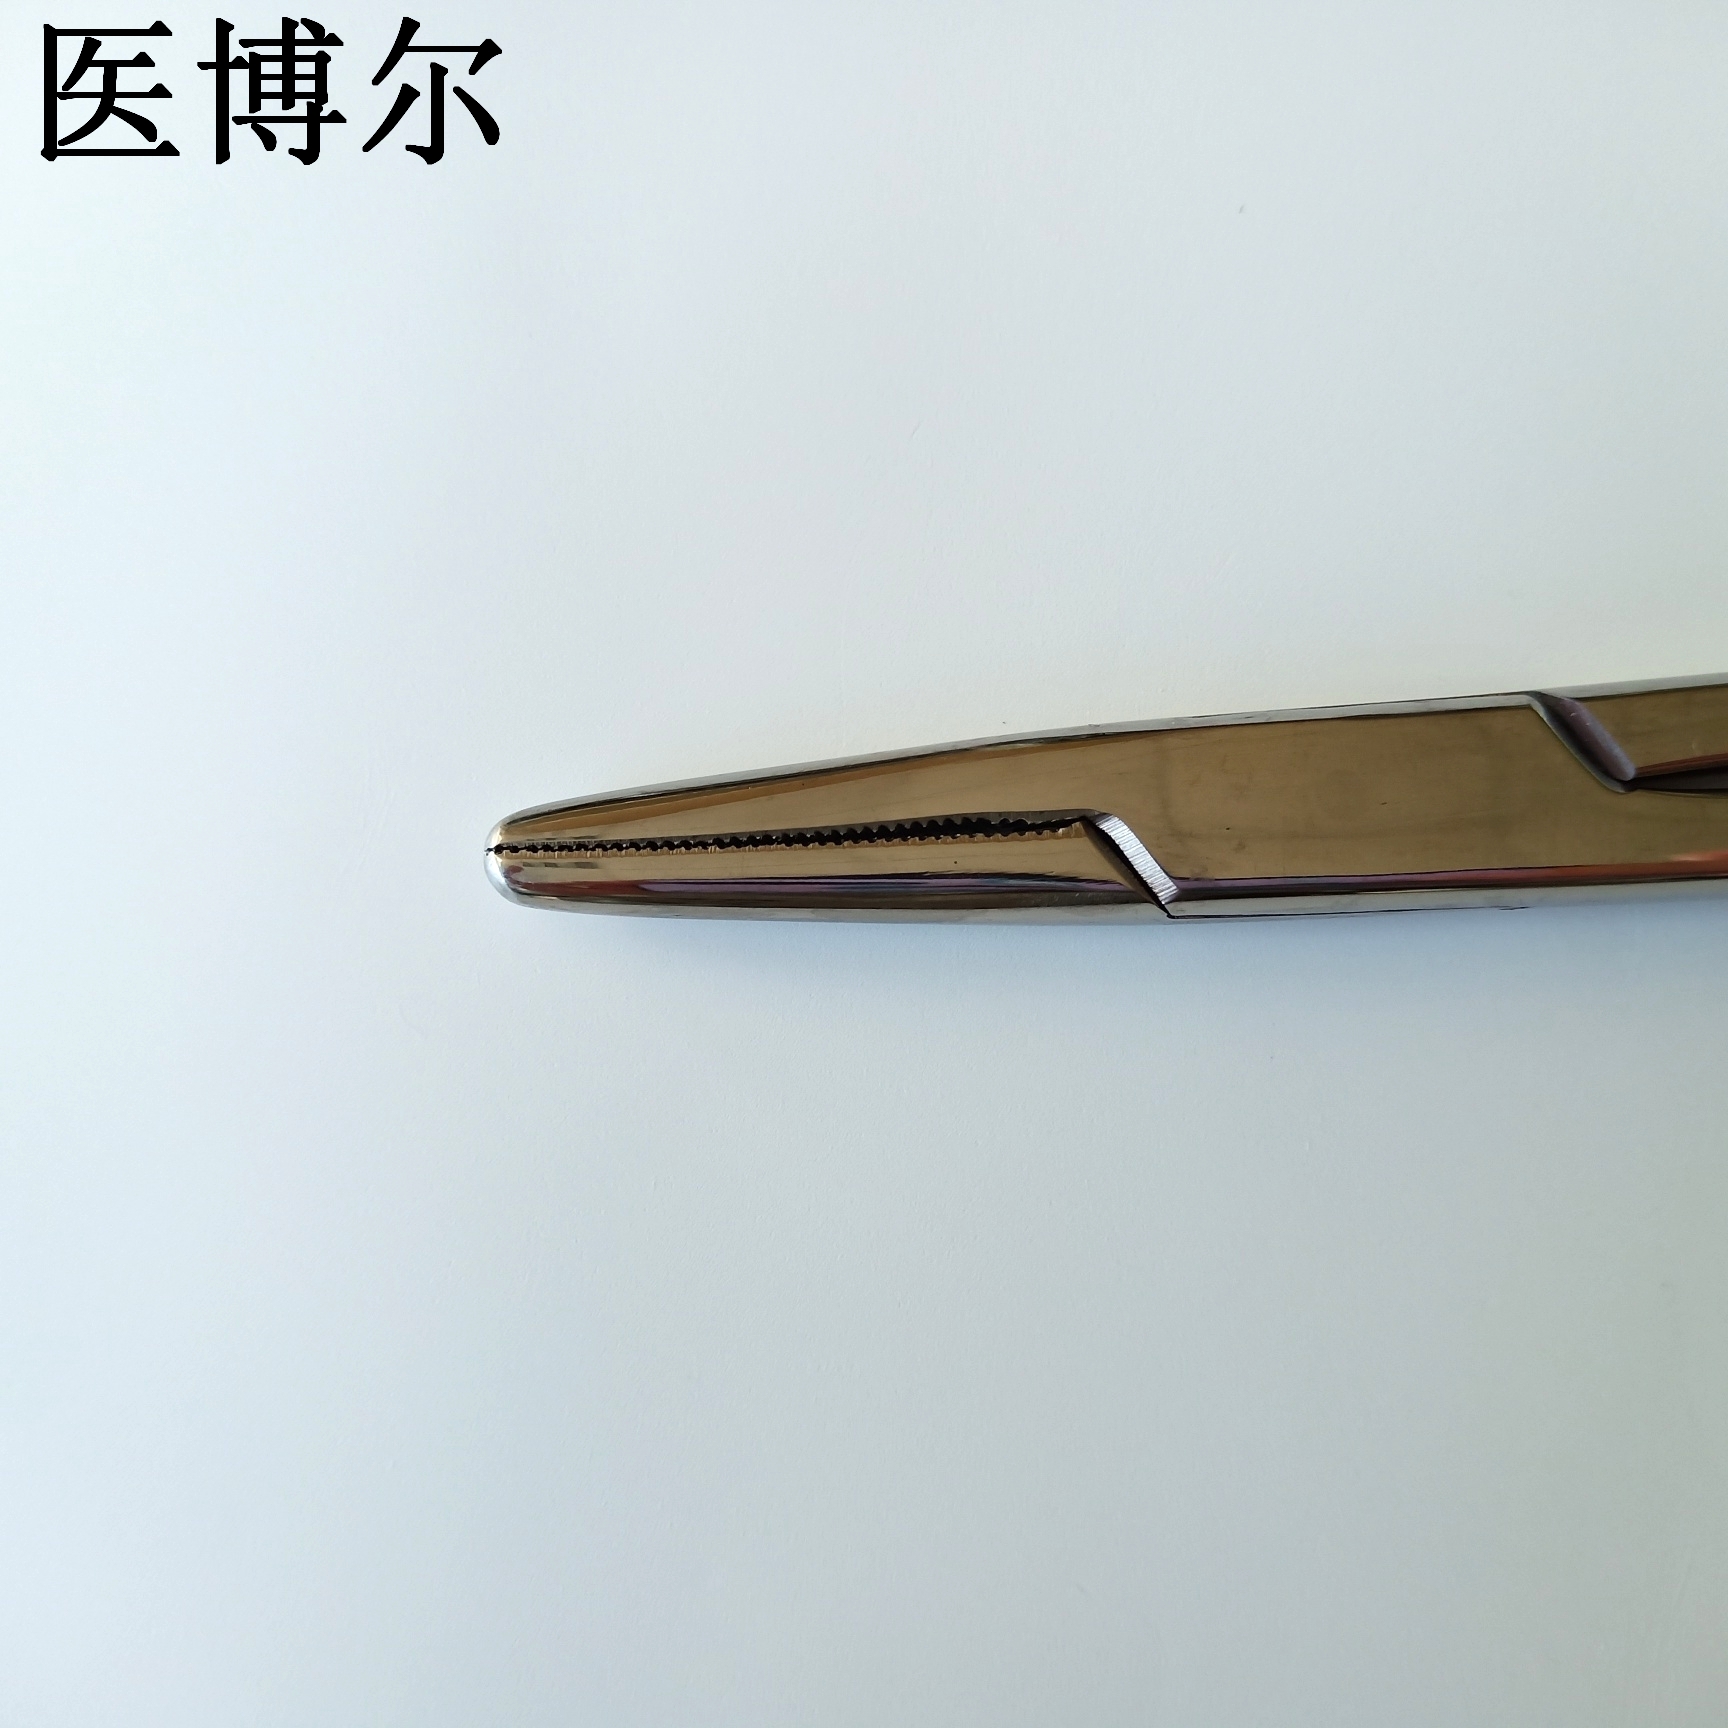 24cm持针器 (1)_看图王.jpg